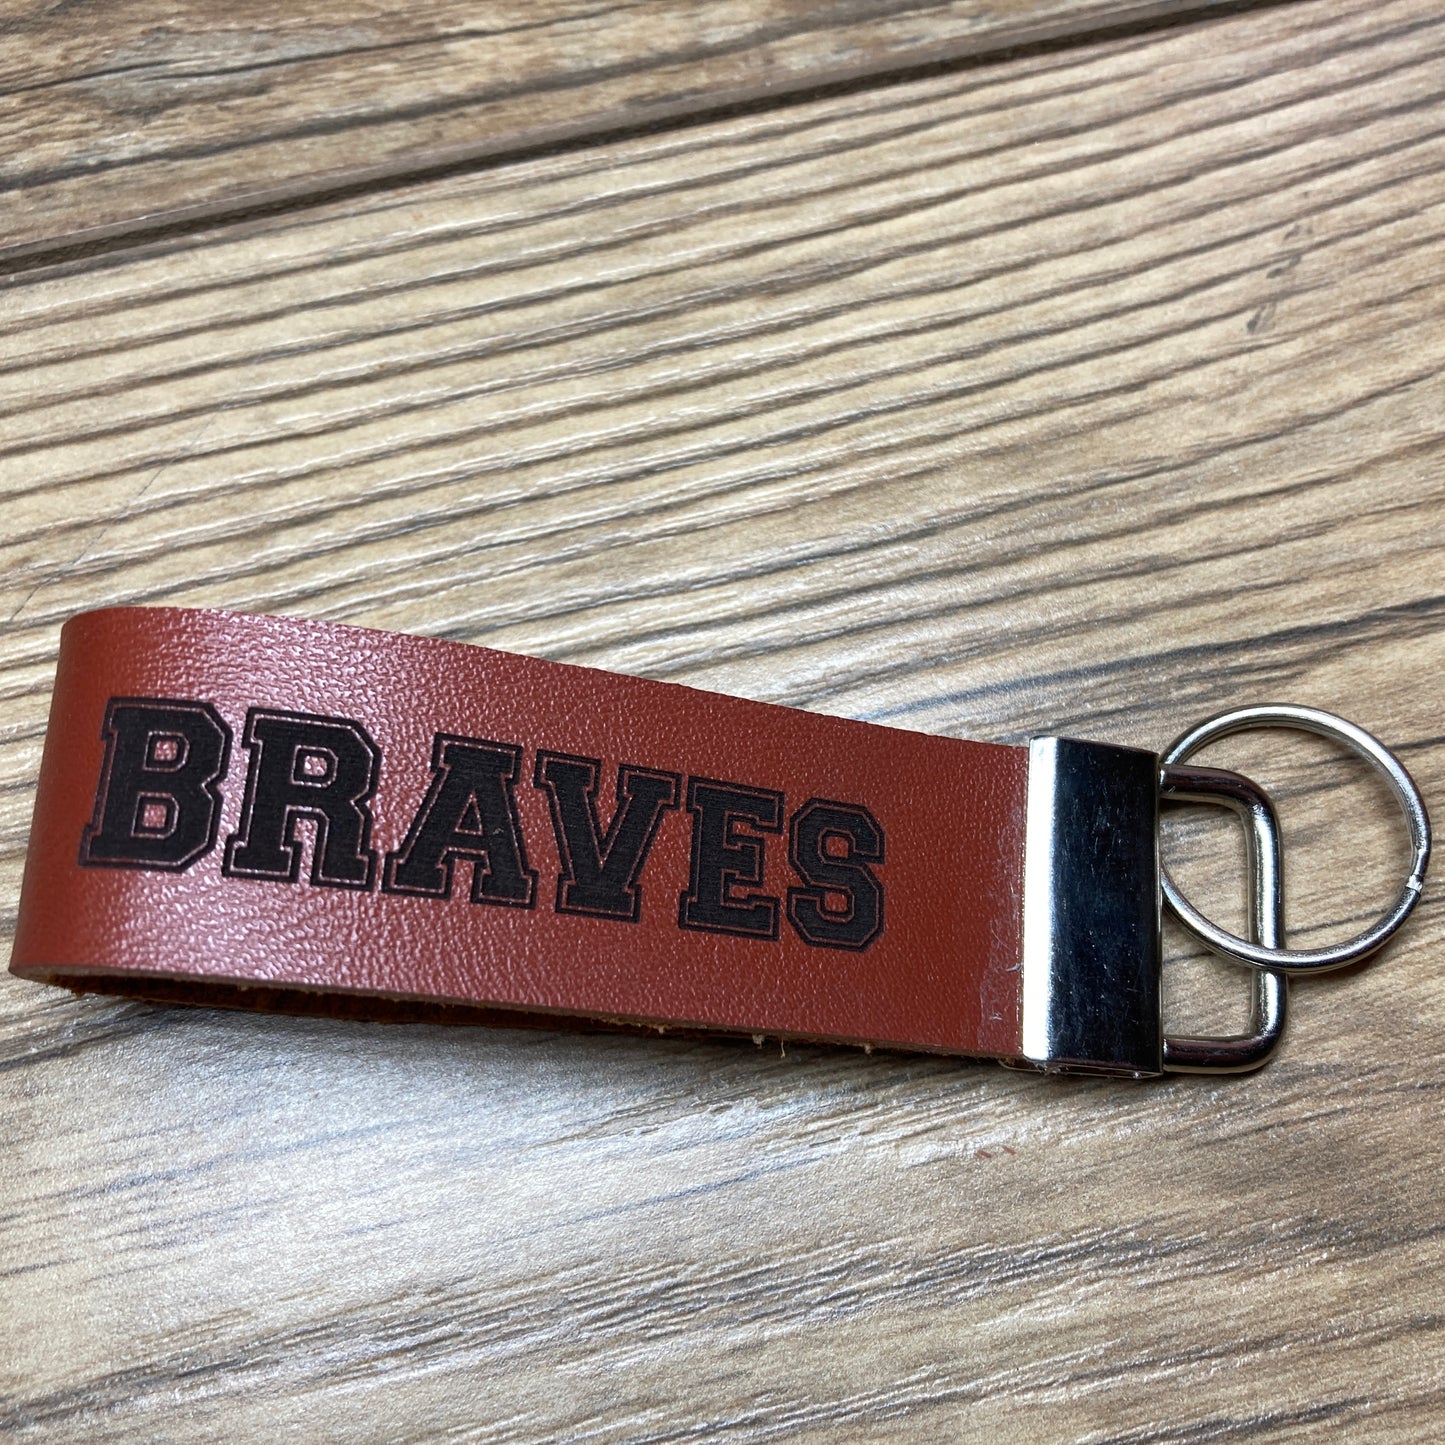 Heard Braves "H" Leather Keychain